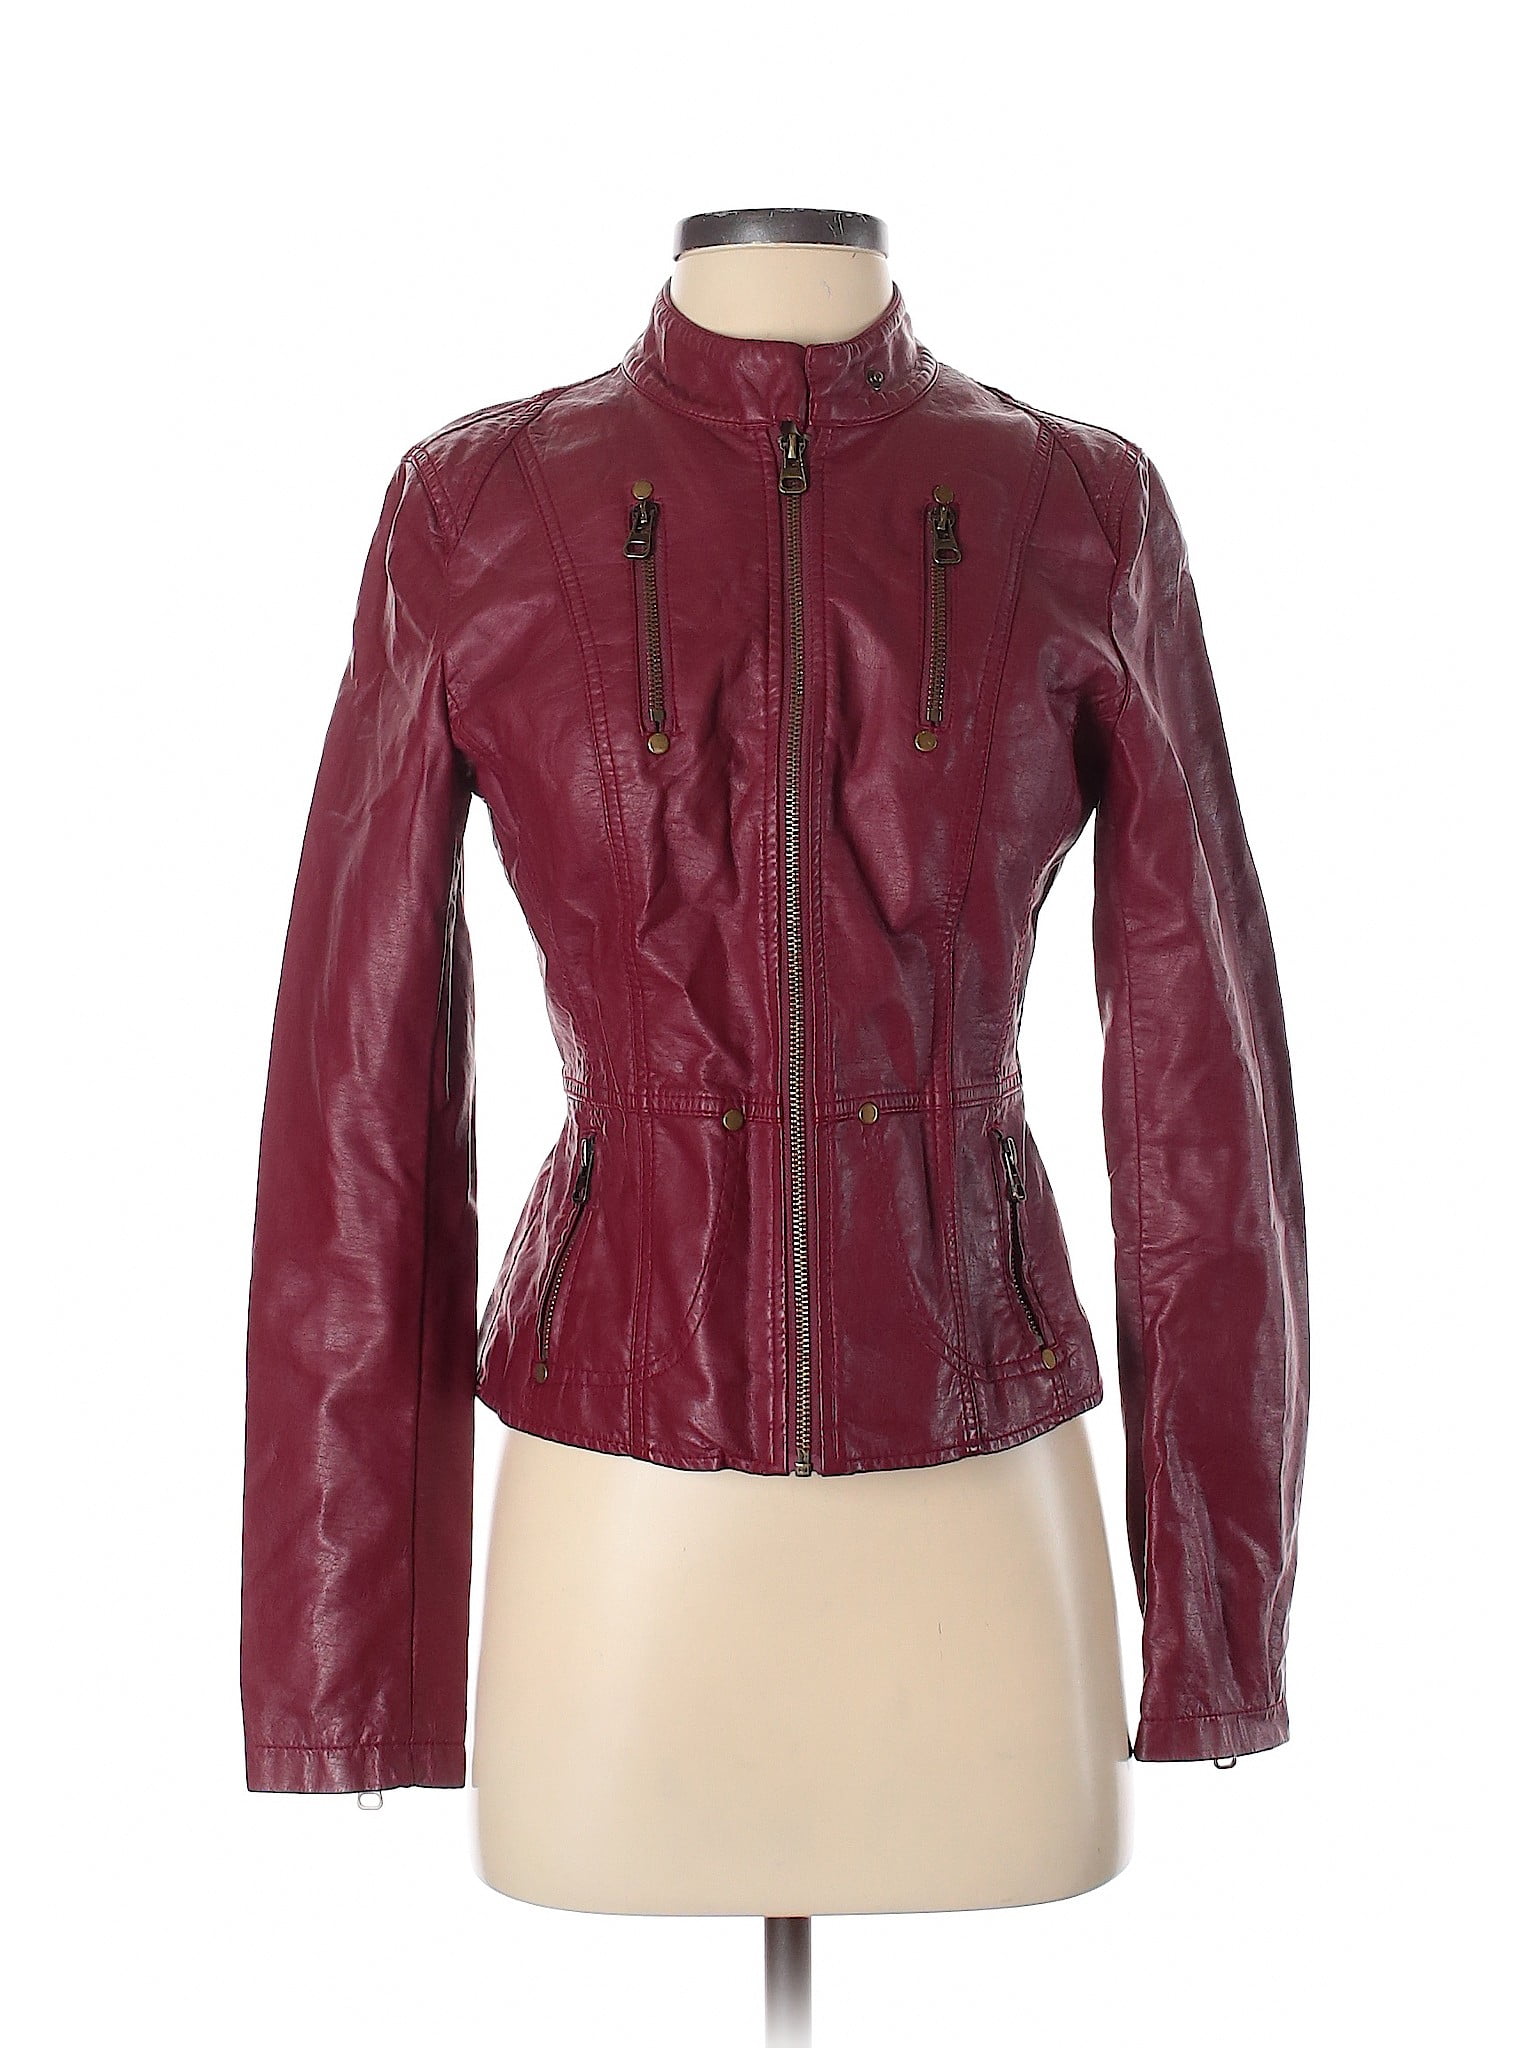 TCEC - Pre-Owned TCEC Women's Size S Faux Leather Jacket - Walmart.com ...